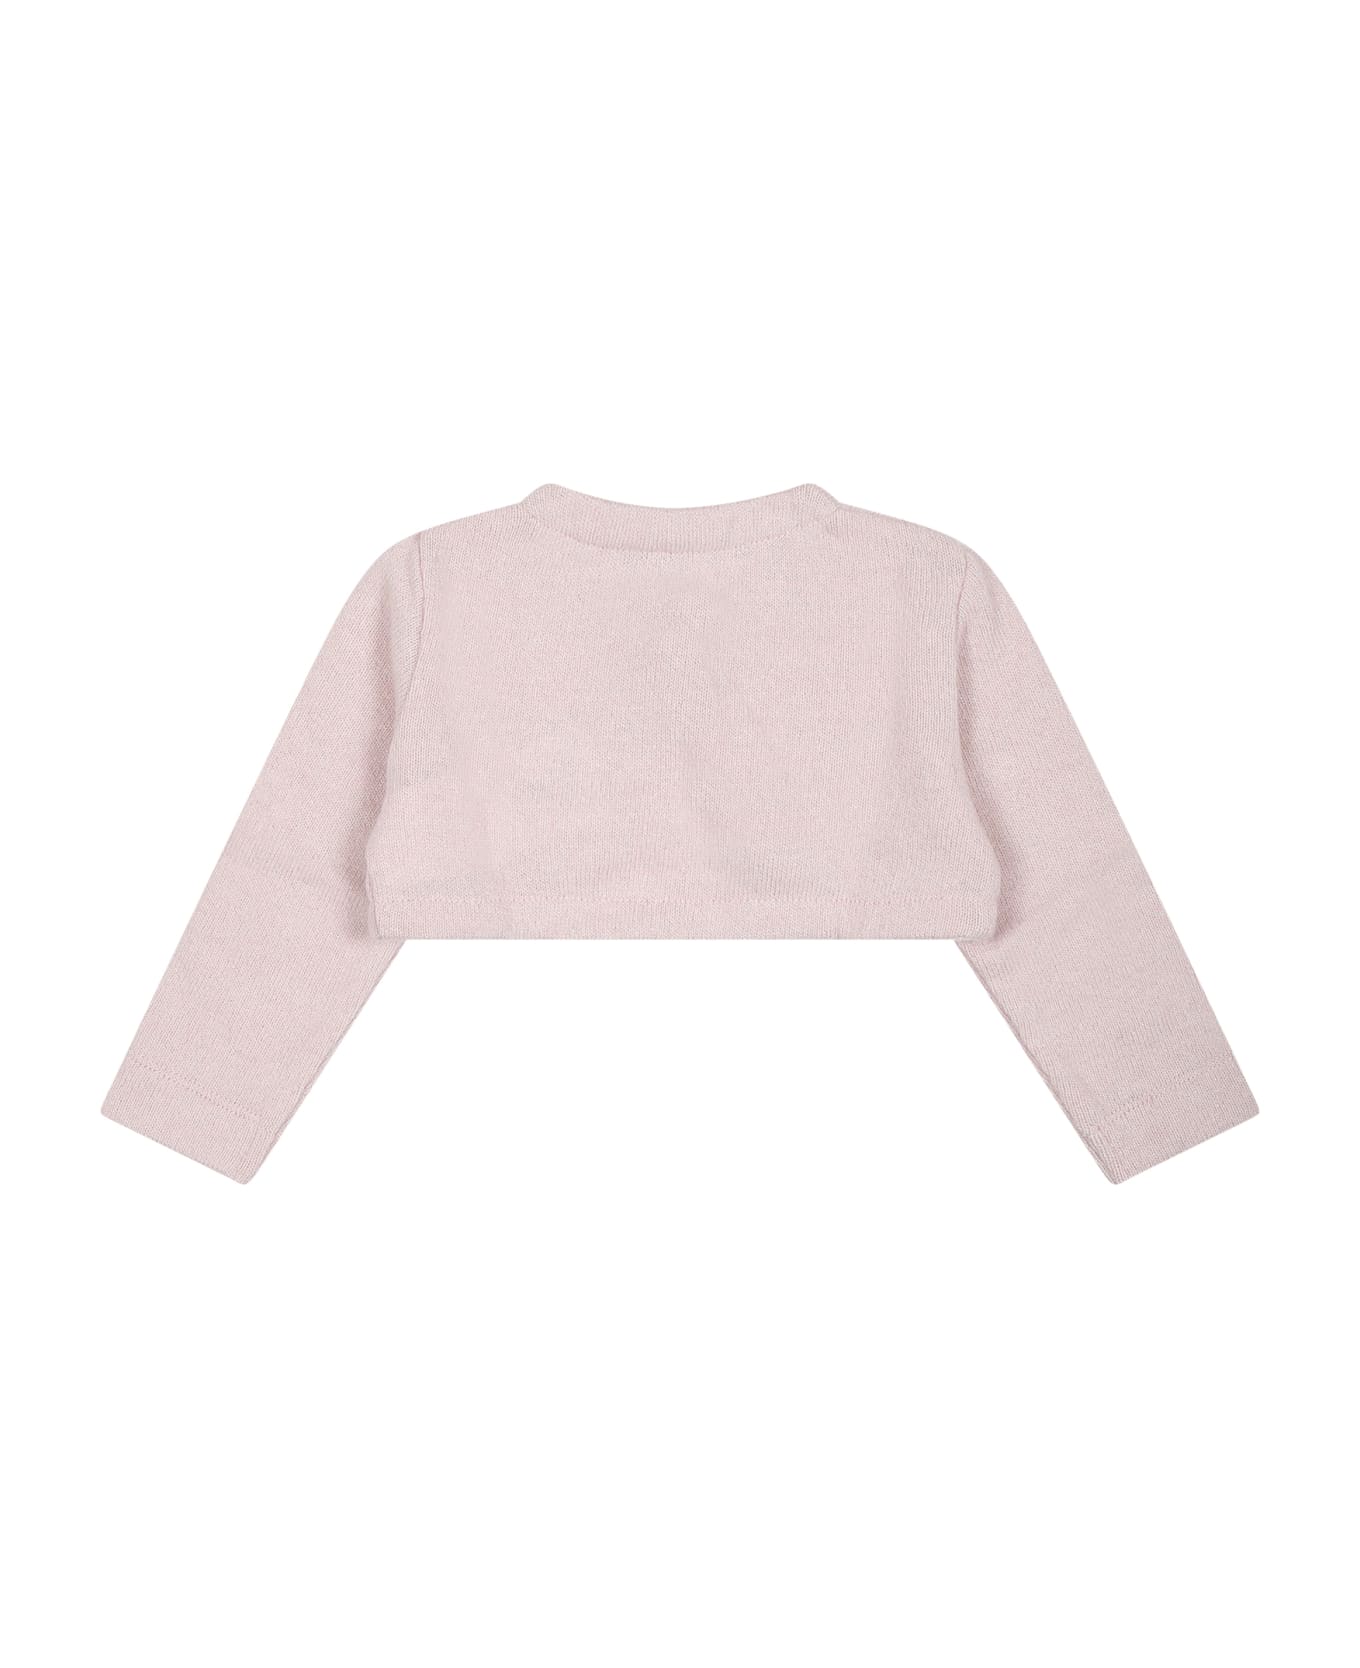 Monnalisa Pink Cardigan For Baby Girl With Logo - Pink ニットウェア＆スウェットシャツ